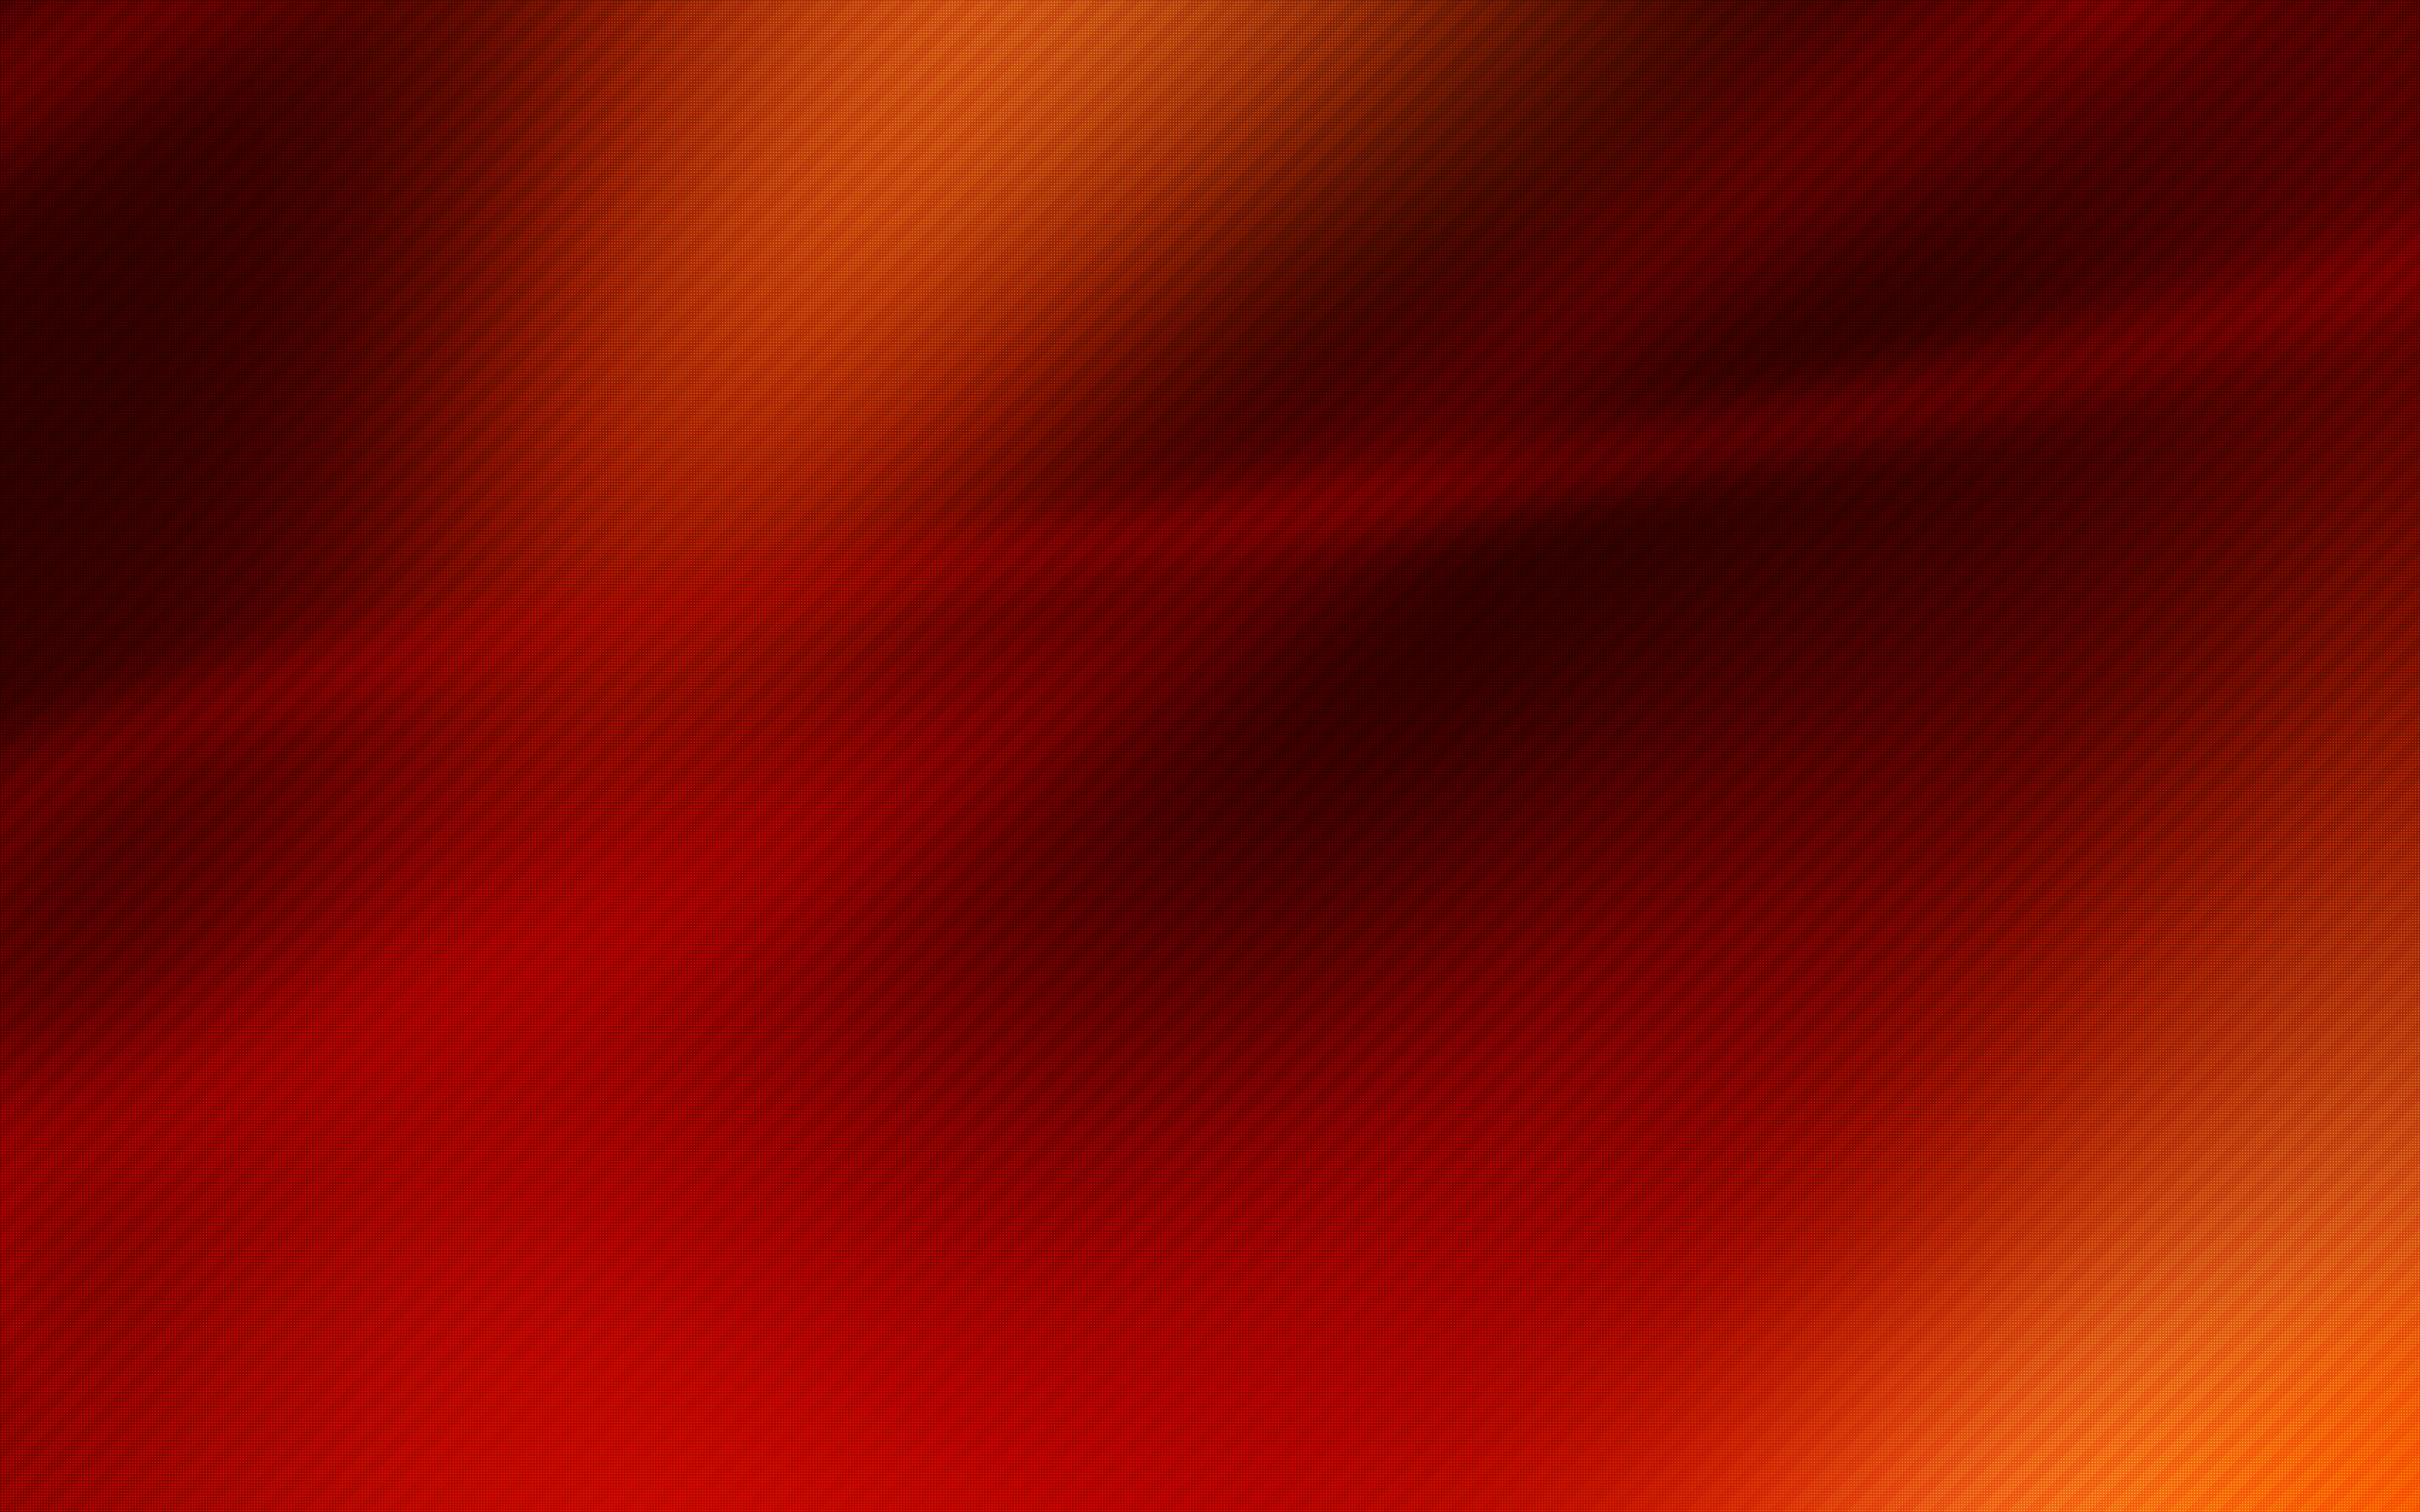 red background images for websites